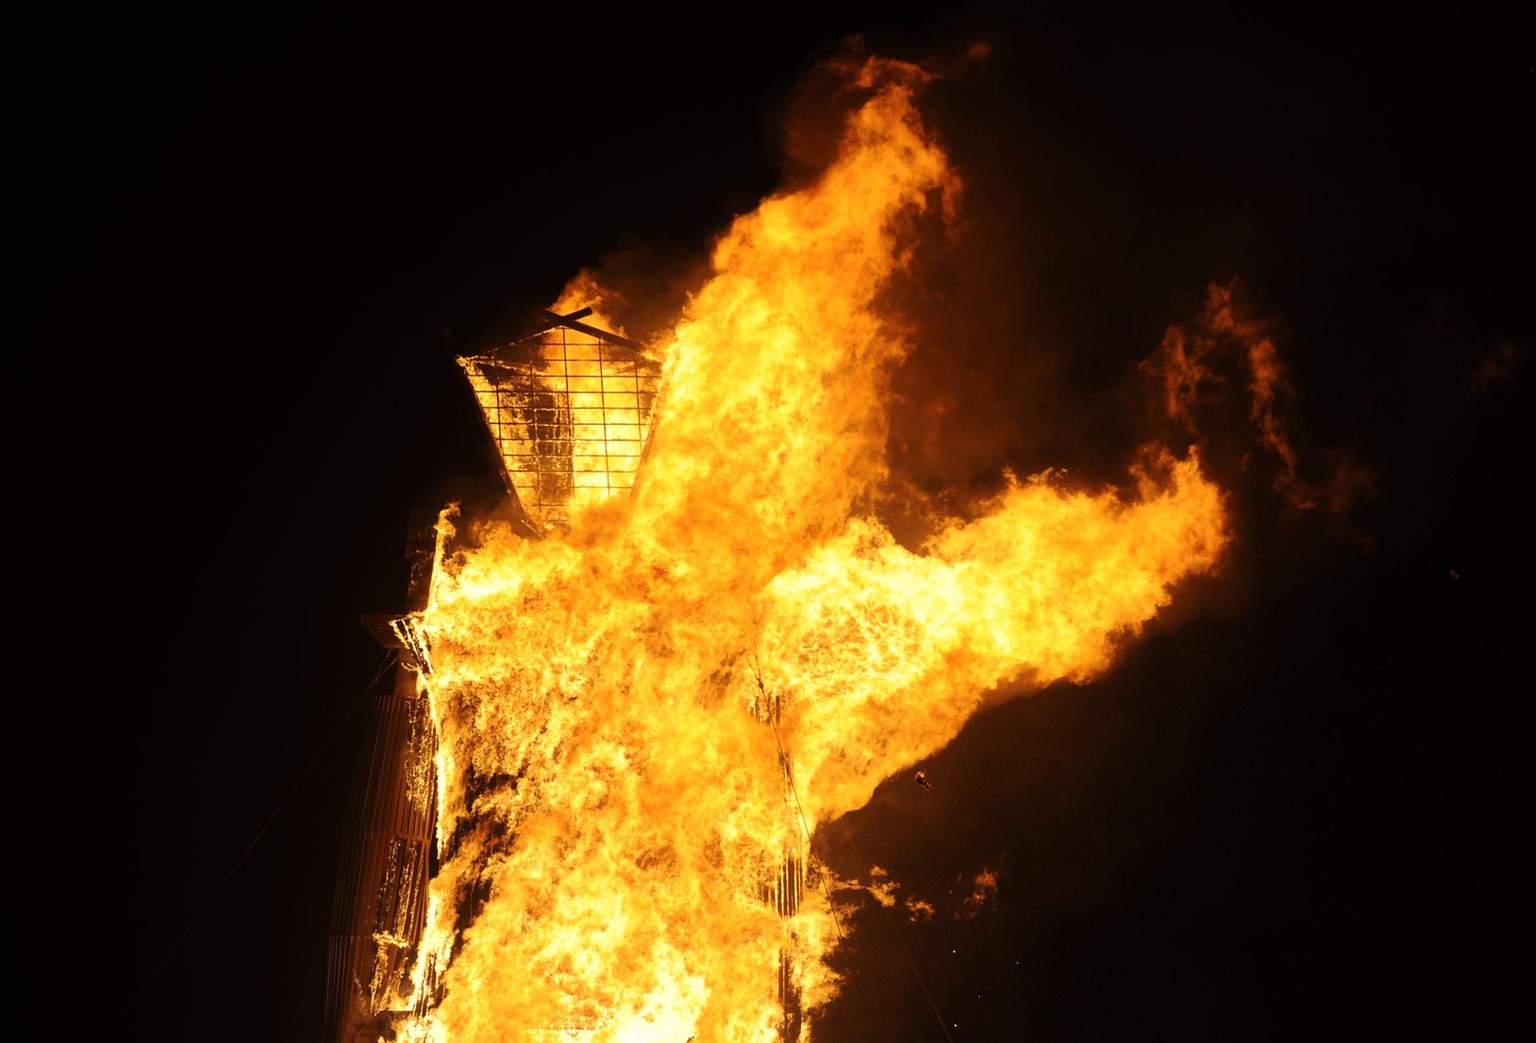 The man burns at the annual Burning Man event on the Black Rock Desert of Gerlach, Nevada on Aug. 30, 2014. (AP Photo/Reno Gazette-Journal, Andy Barron)